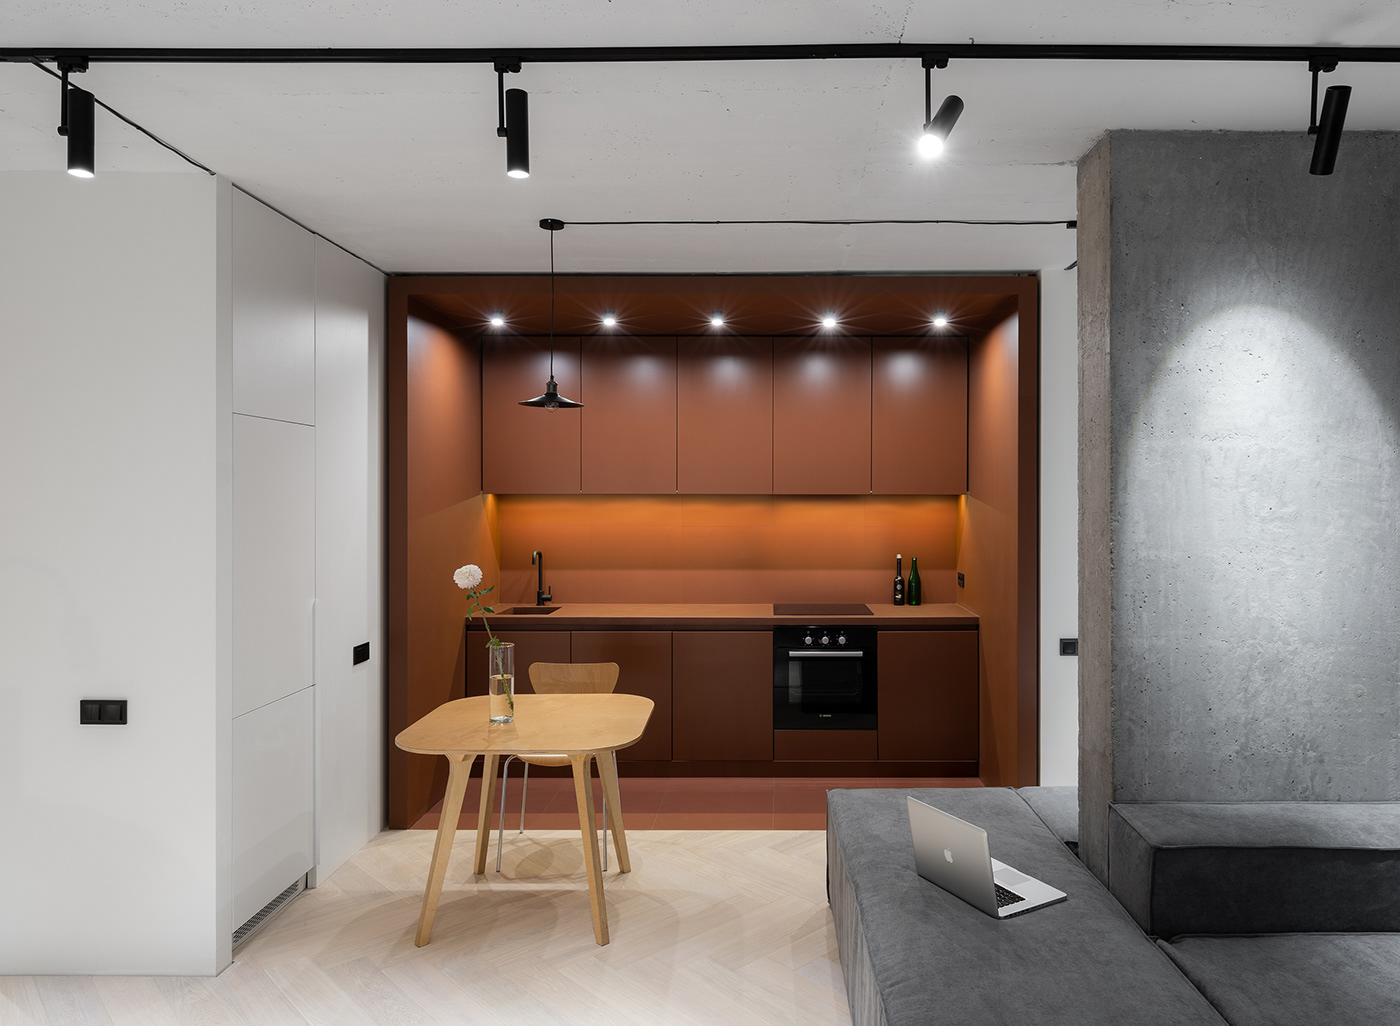 interiordesign architecture Photography  kitchen black furniture LOFT bedroom